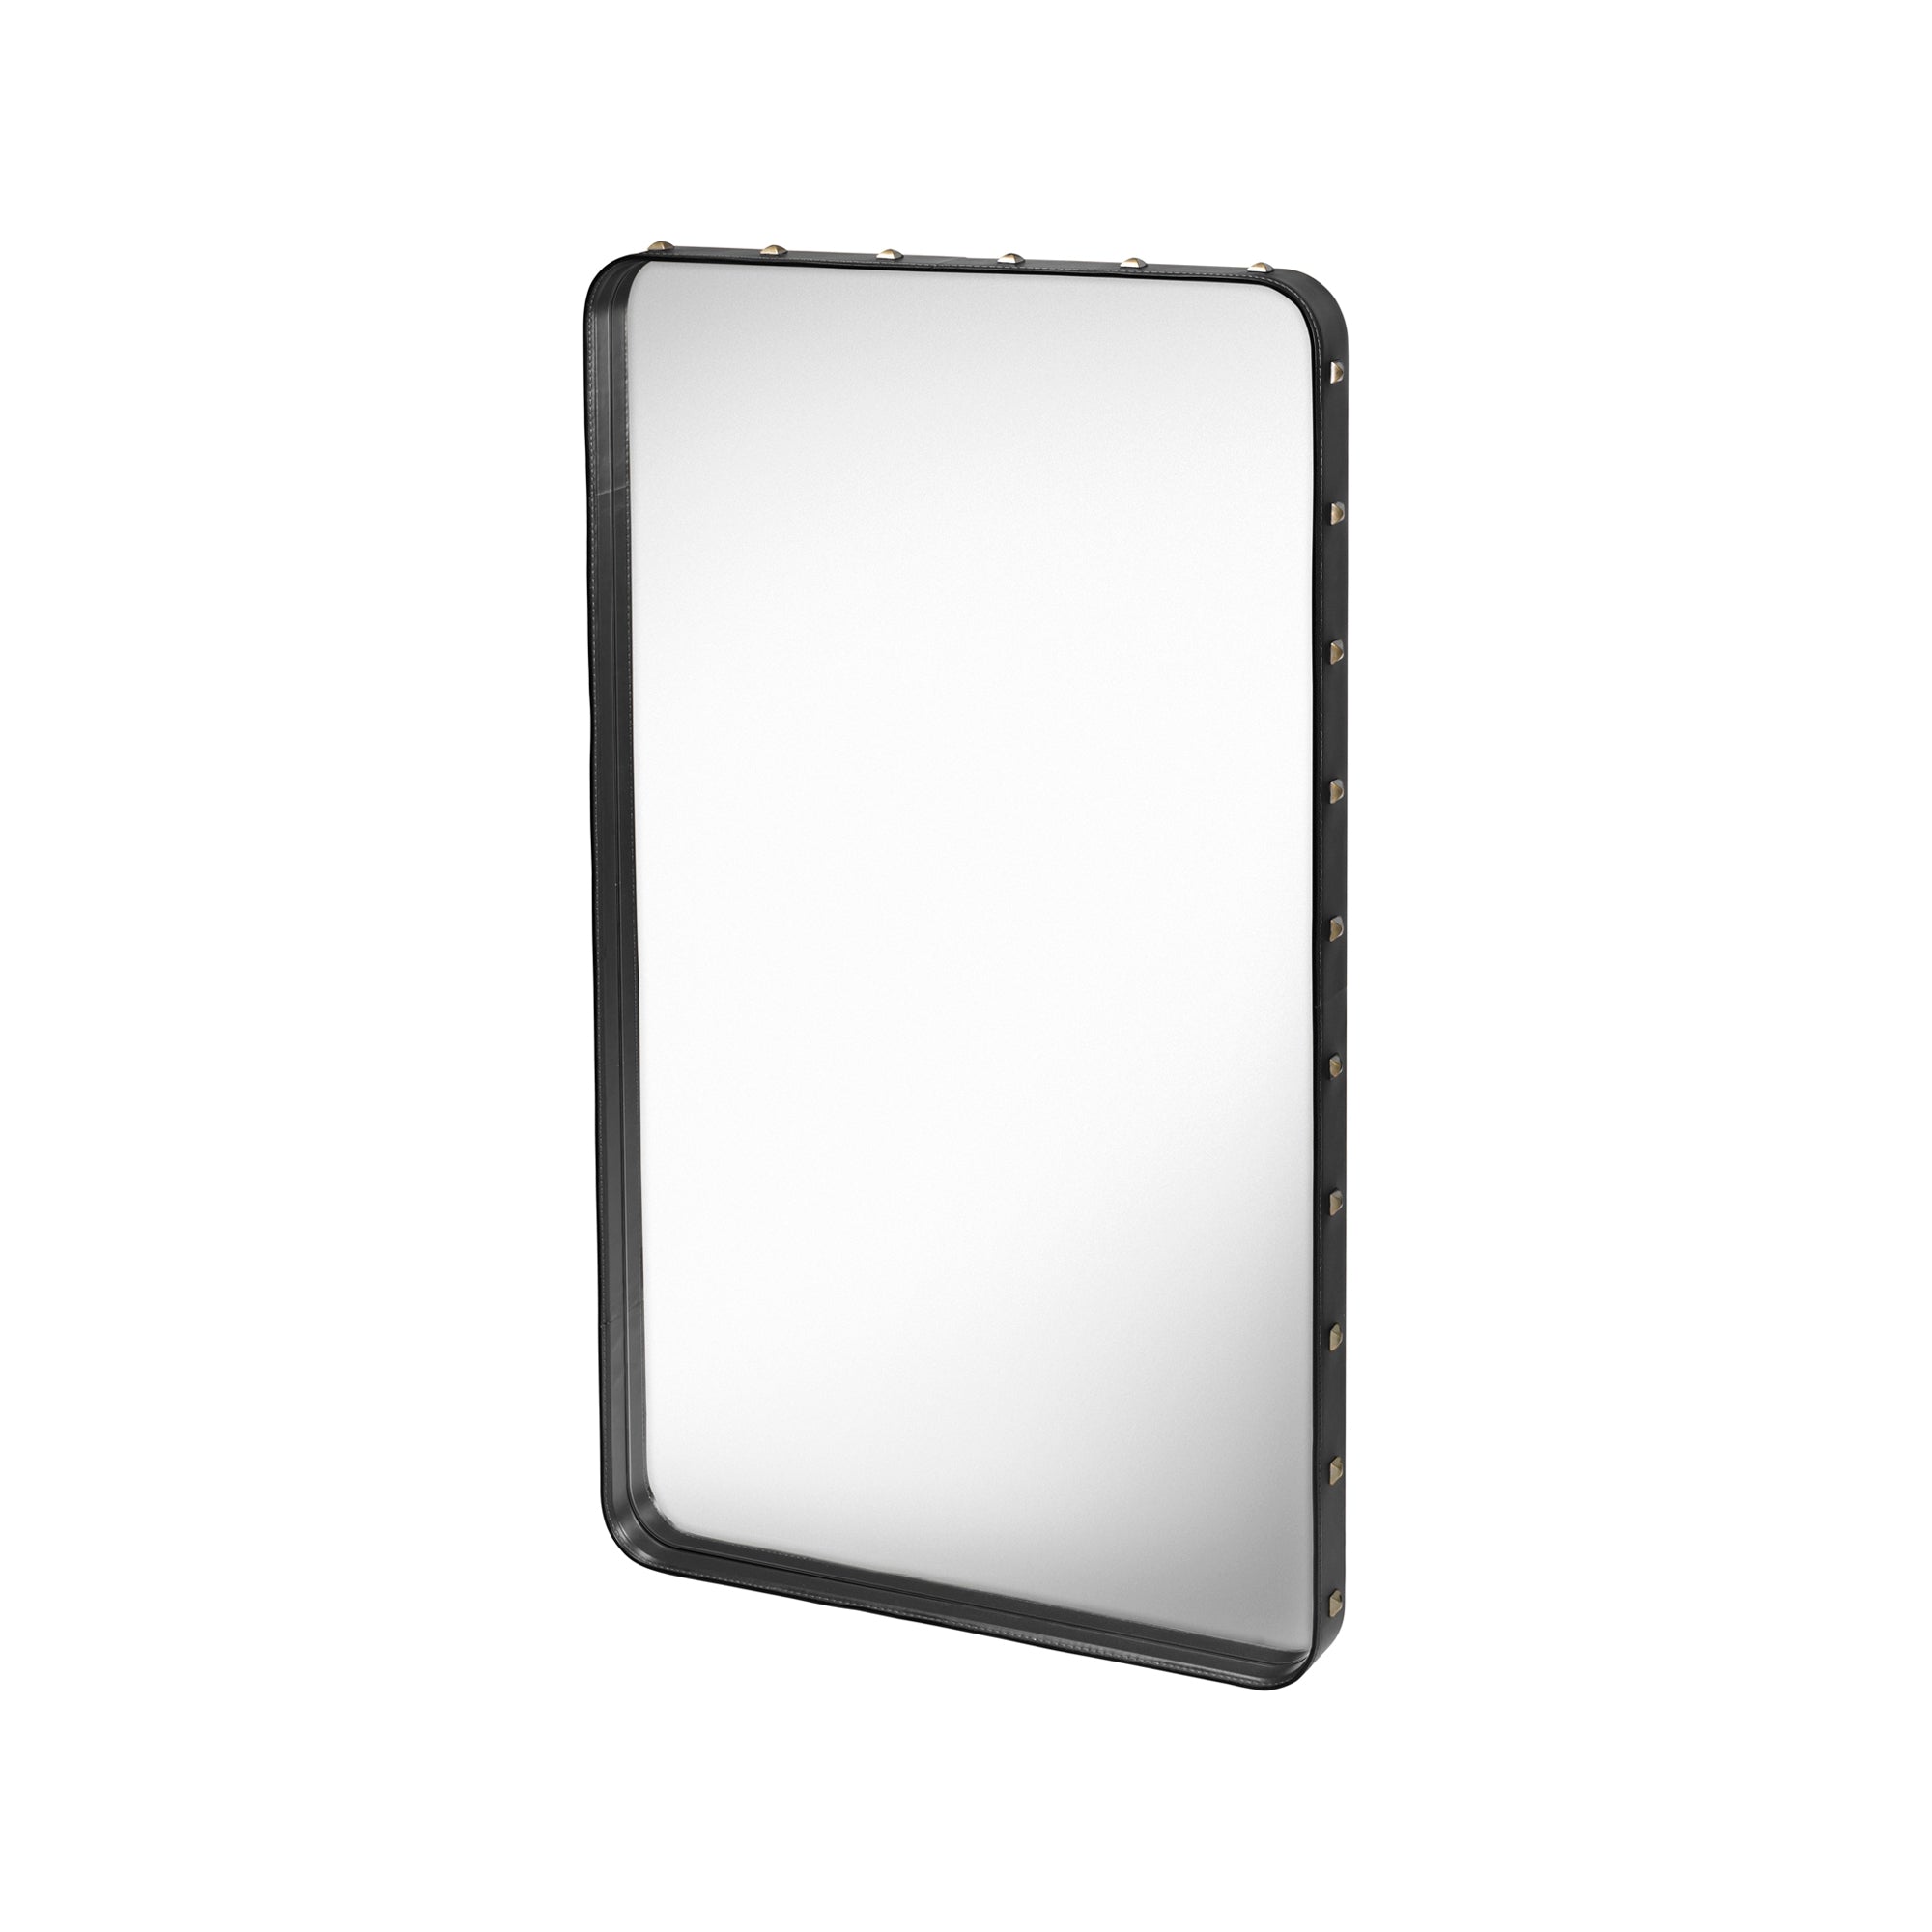 Adnet Wall Mirror